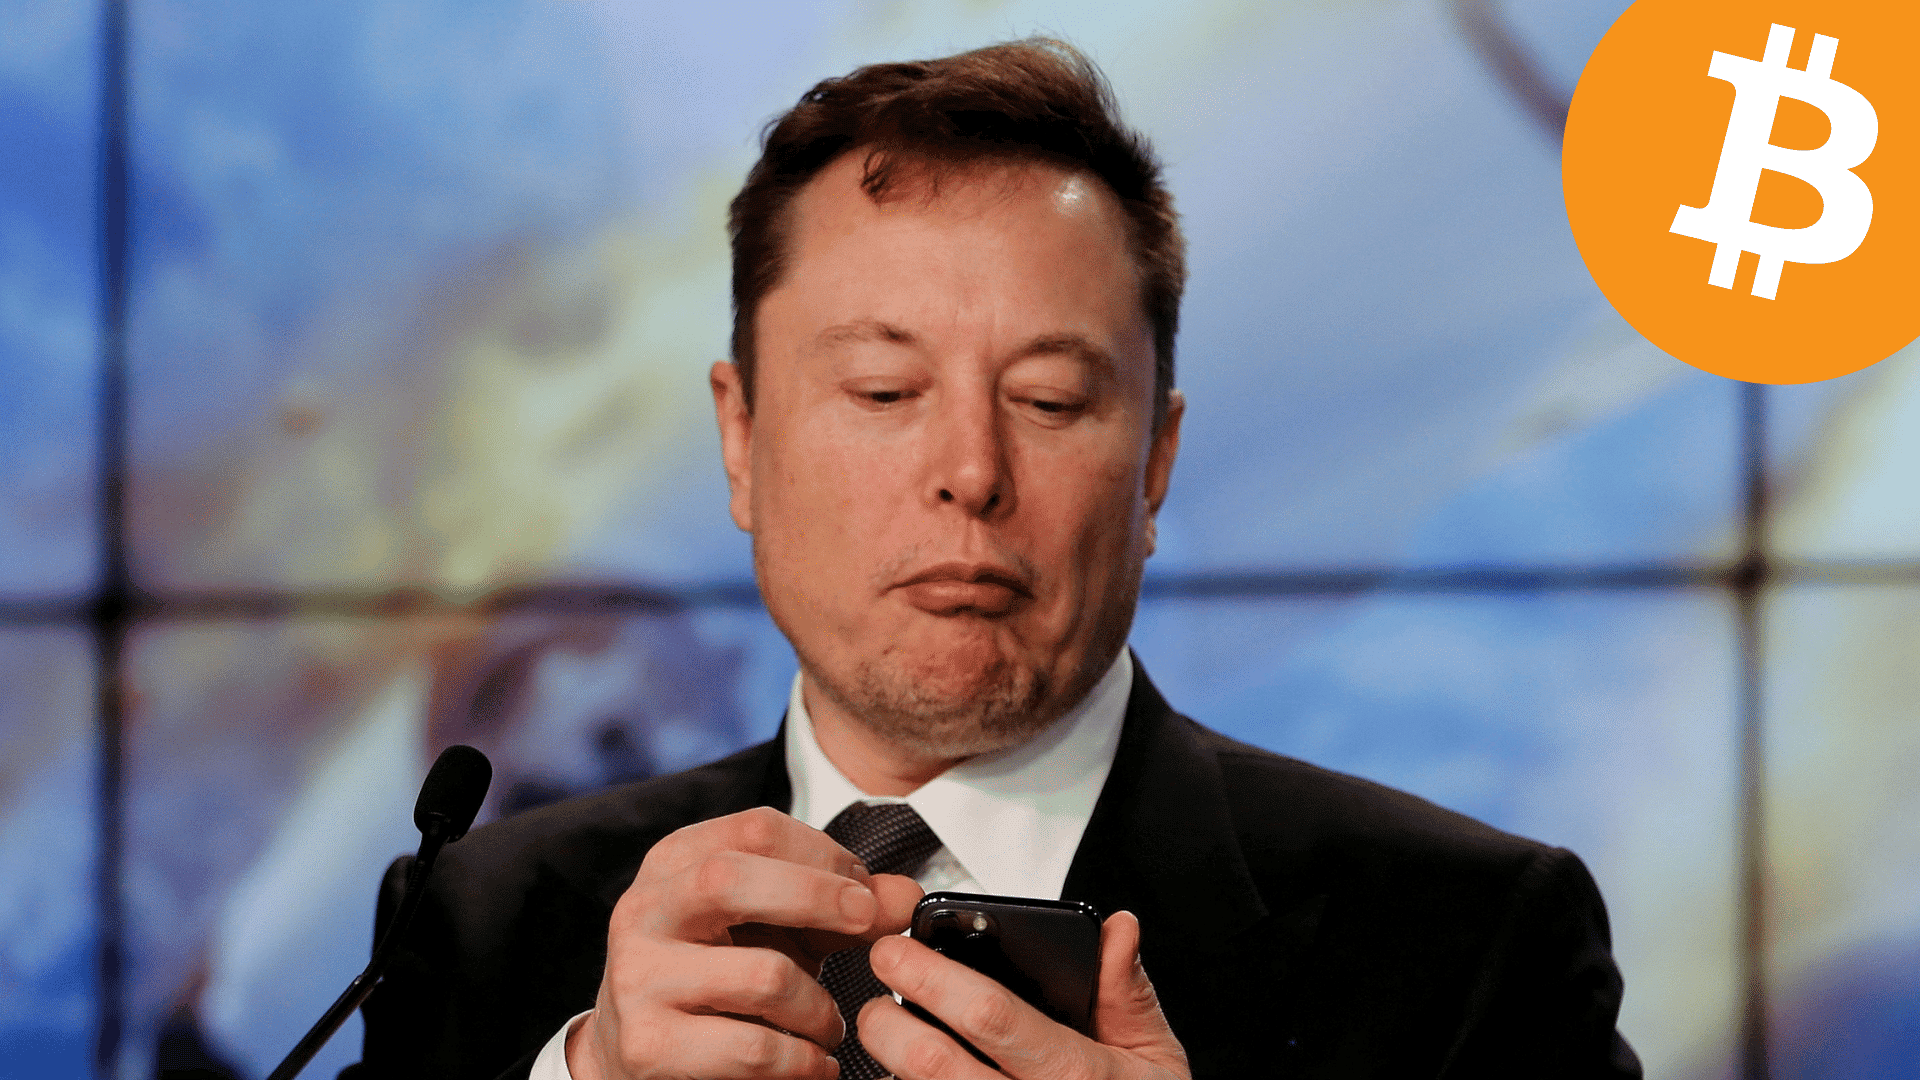 Is Elon Musk dan toch geen fan van Bitcoin?